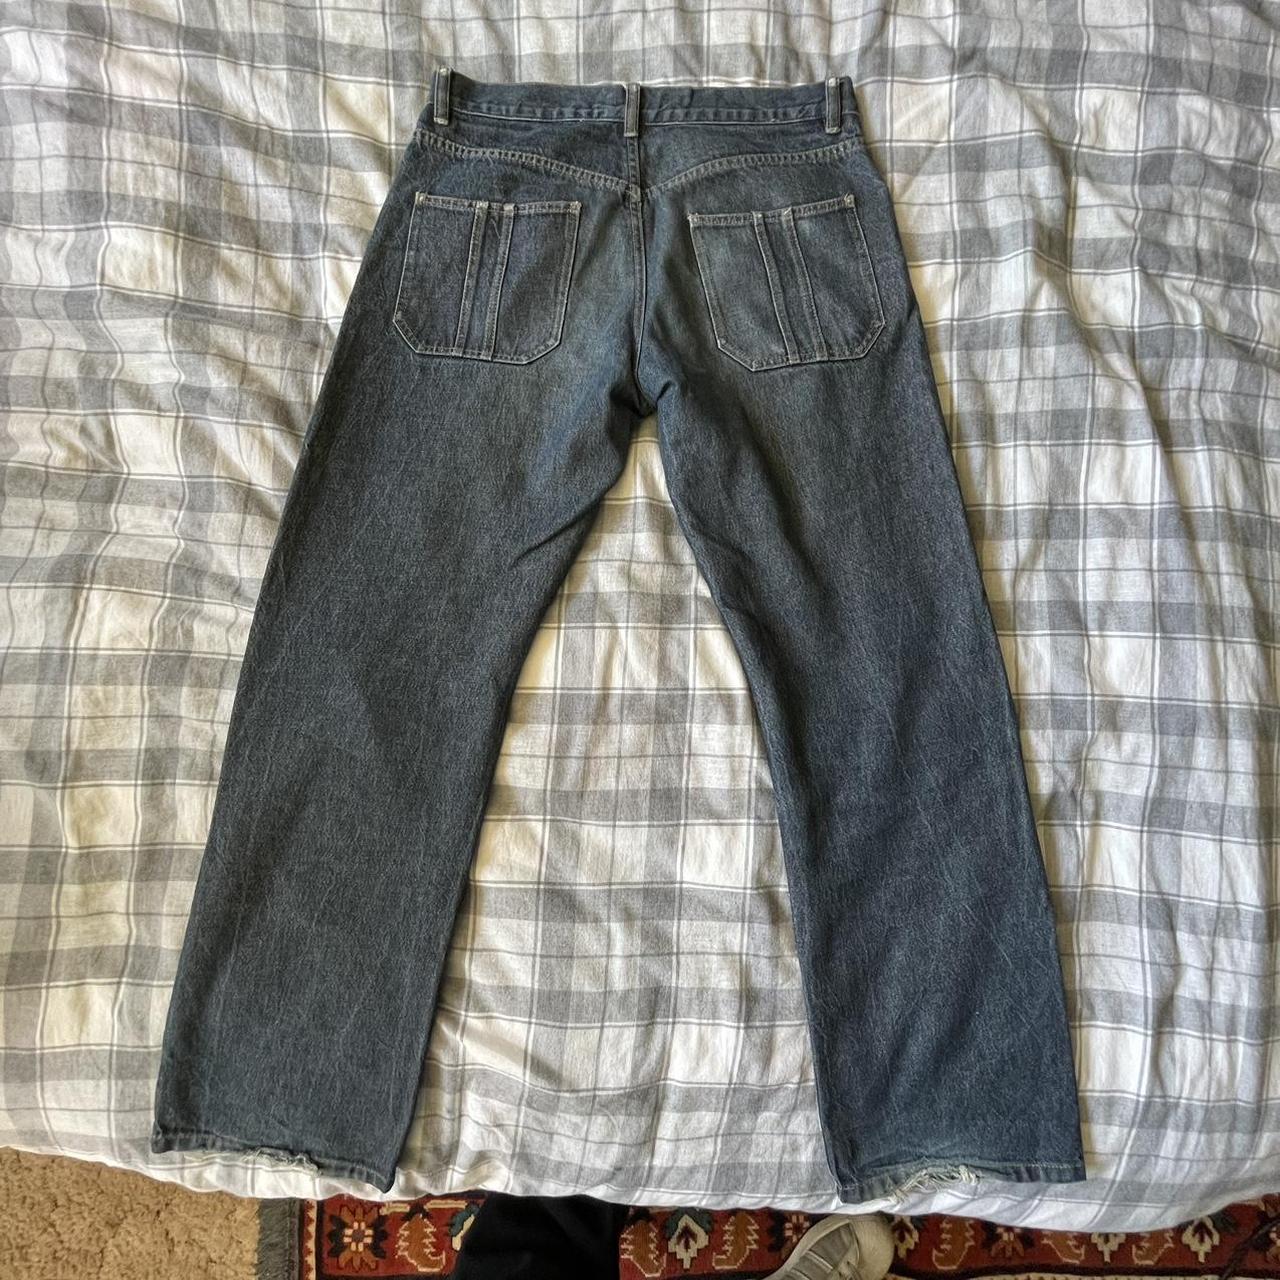 MOOKS - vintage greyish blue jeans. I really love... - Depop